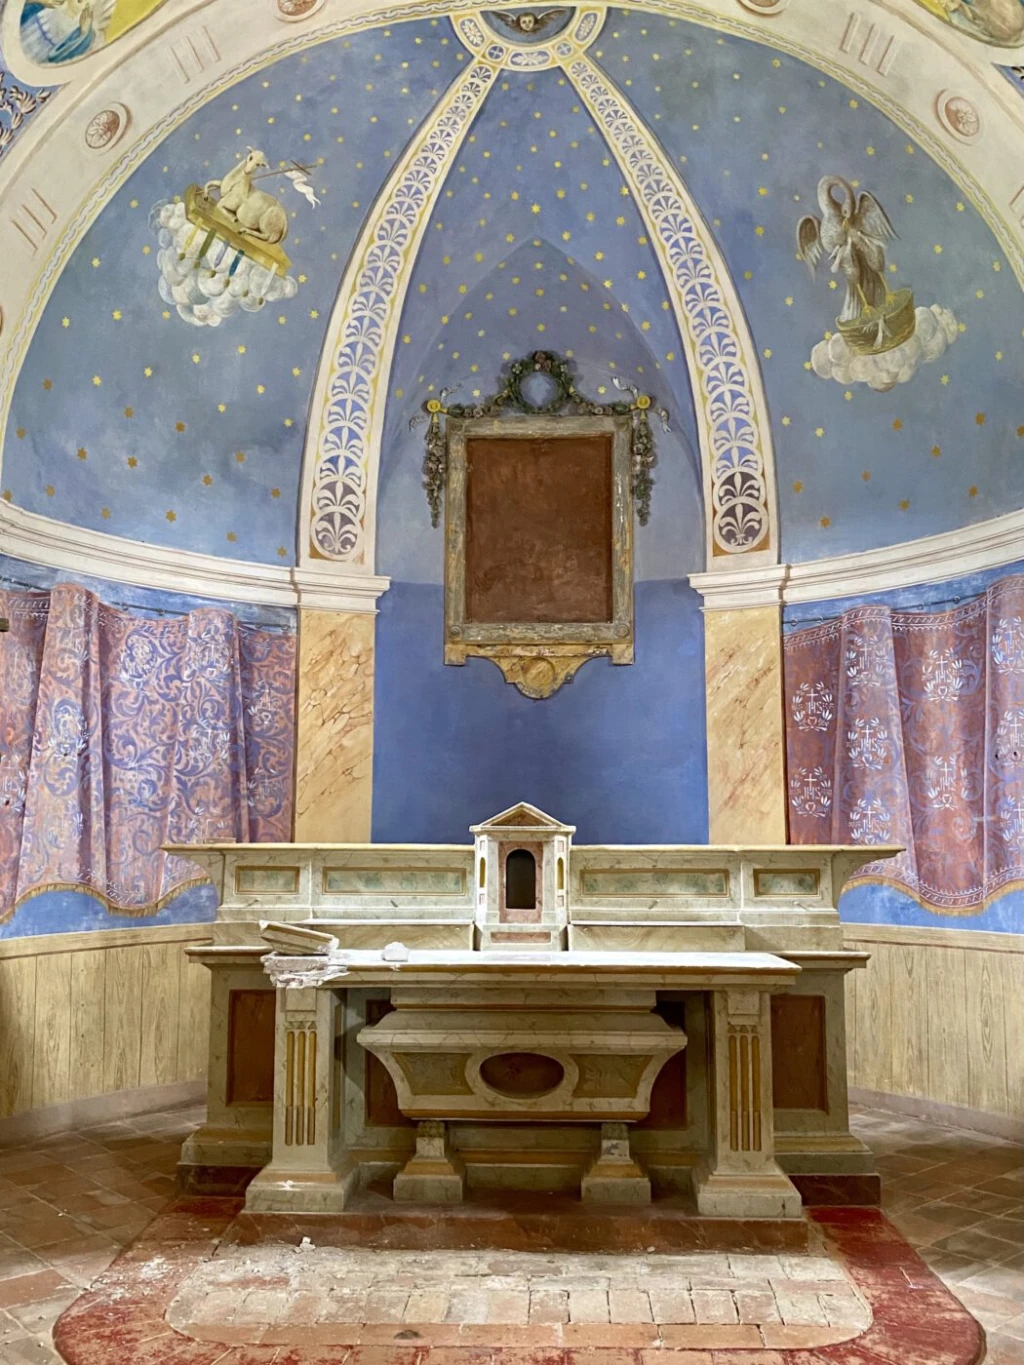 A private wedding chapel the impressive church of Santa Maria Maddalena